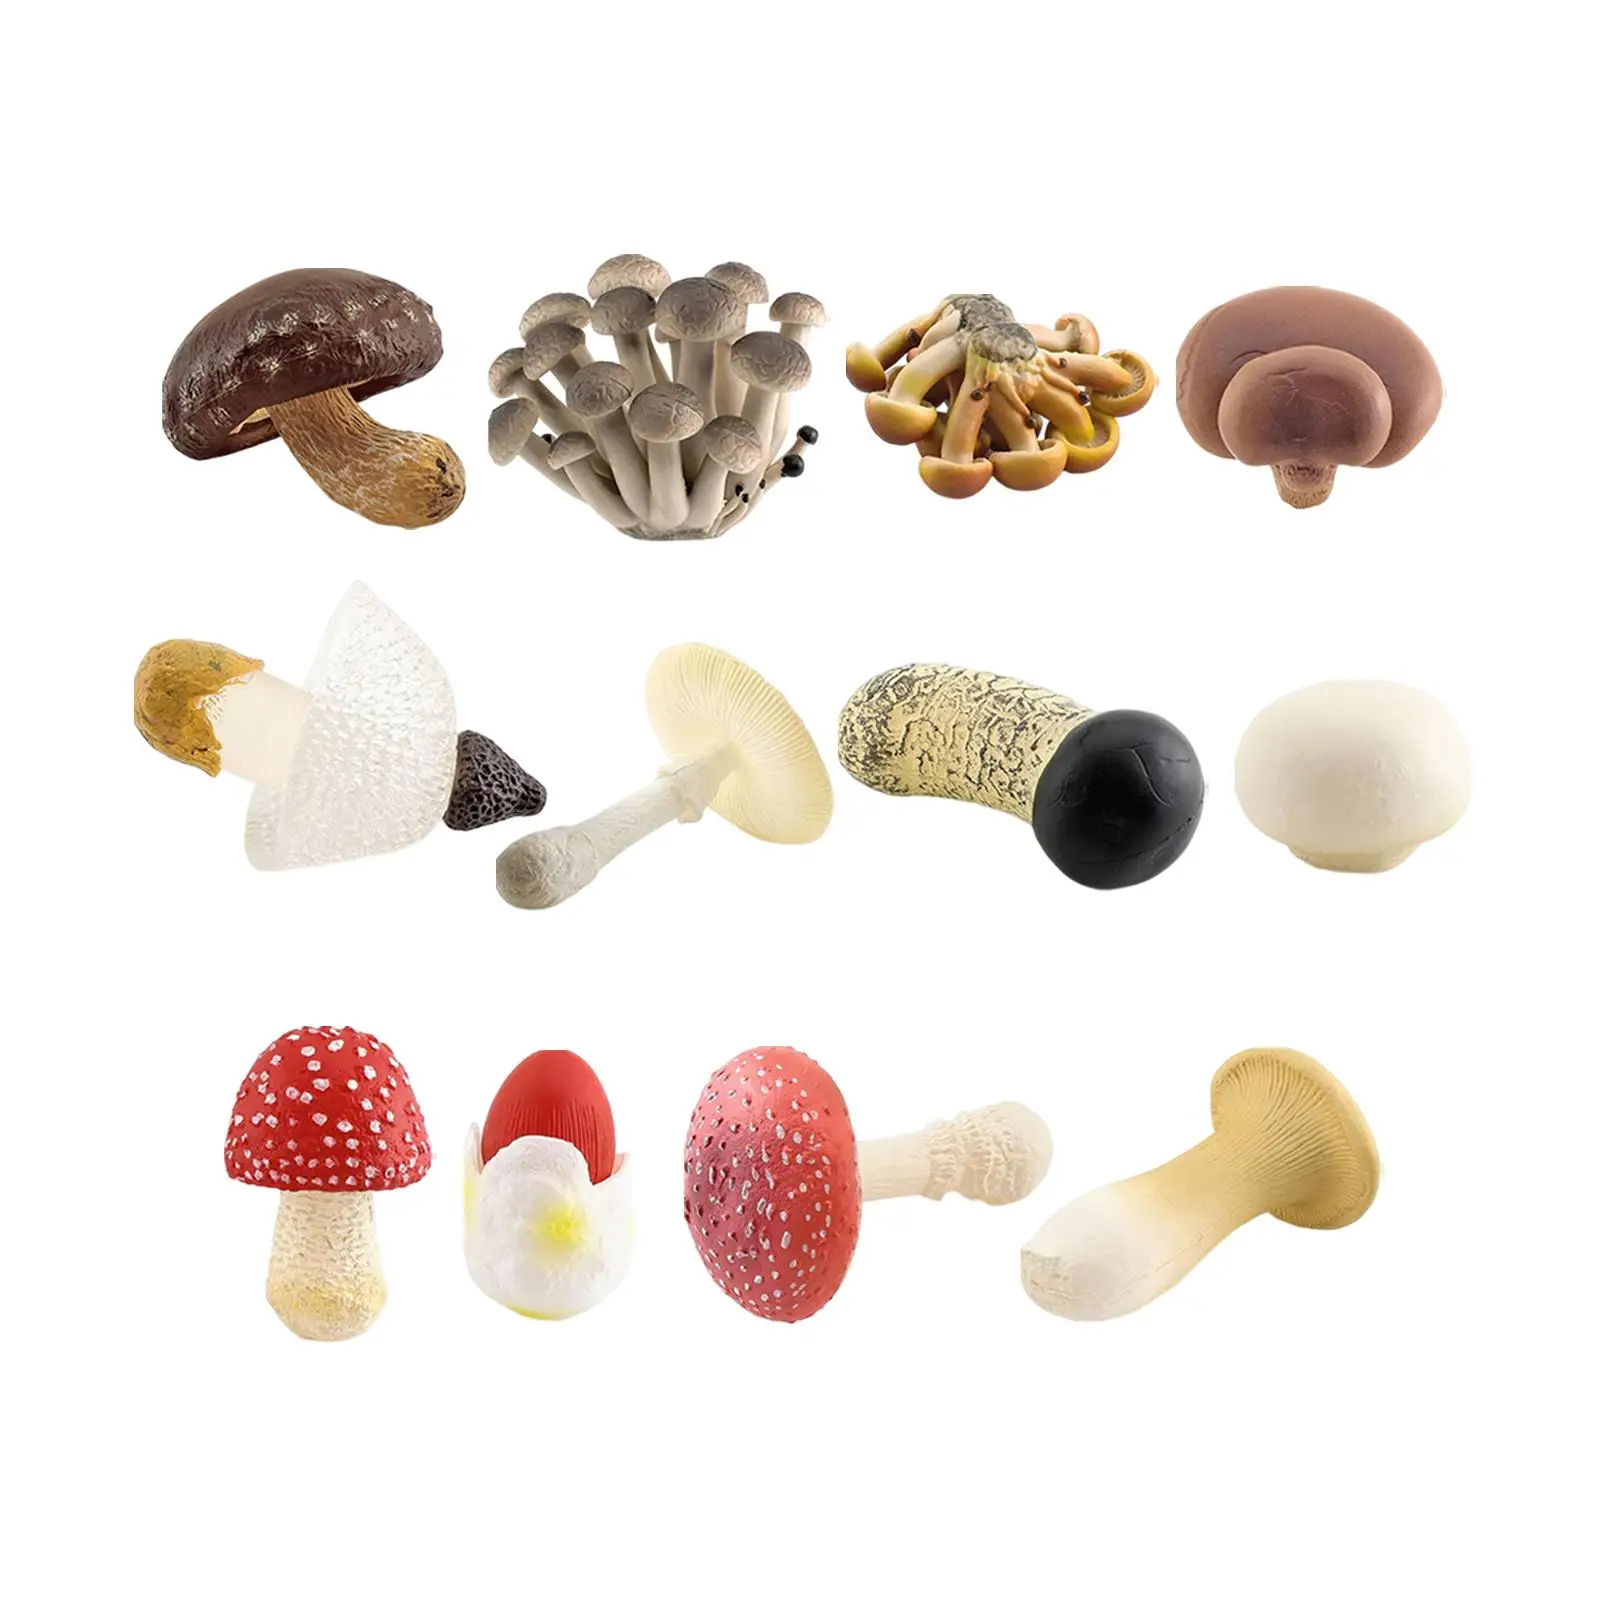 

4x Mushroom Model Development Toy Ornaments Props Figurines for Storytelling